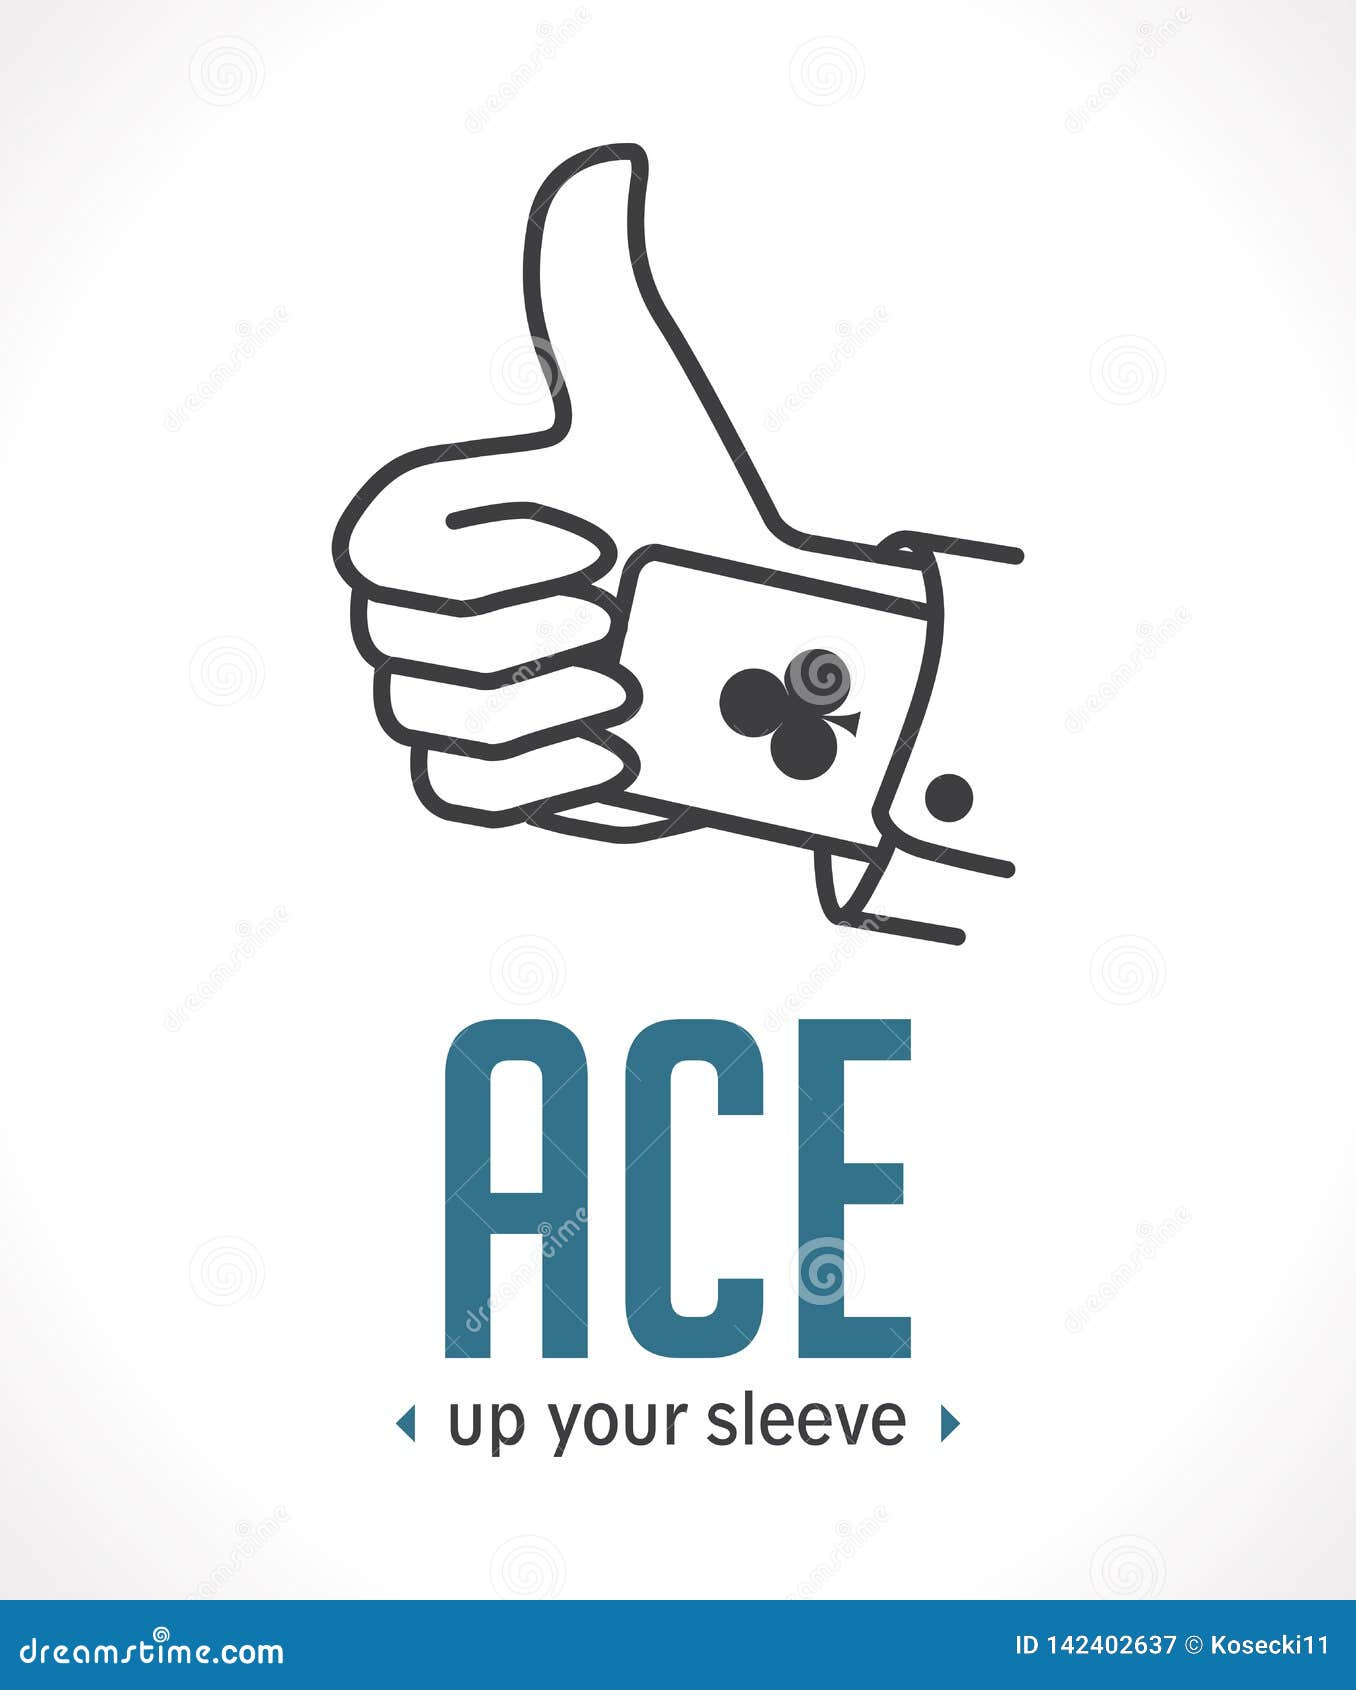 ace up your sleeve - most important decisive argument